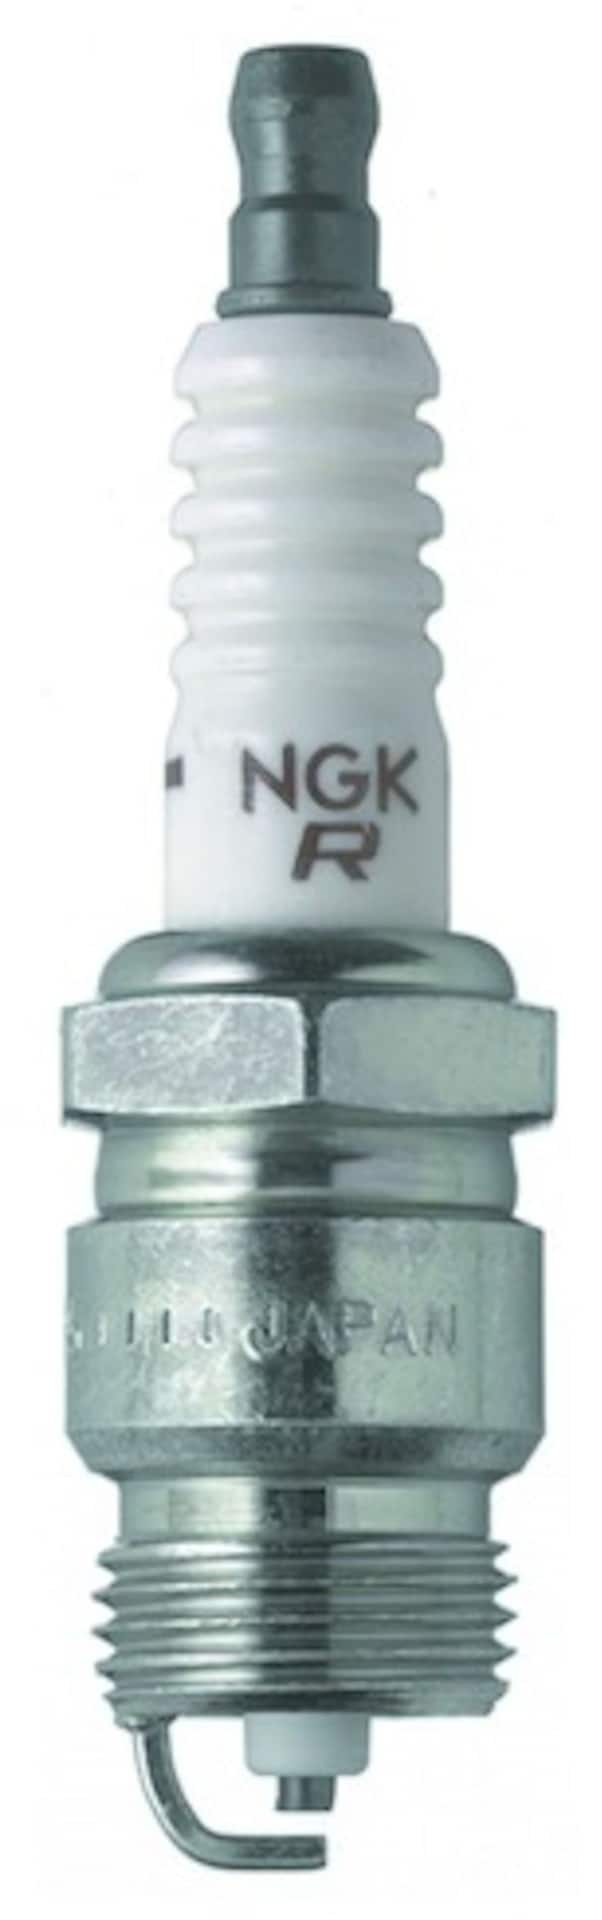 NGK G-Power Platinum Spark Plug, 2-pk